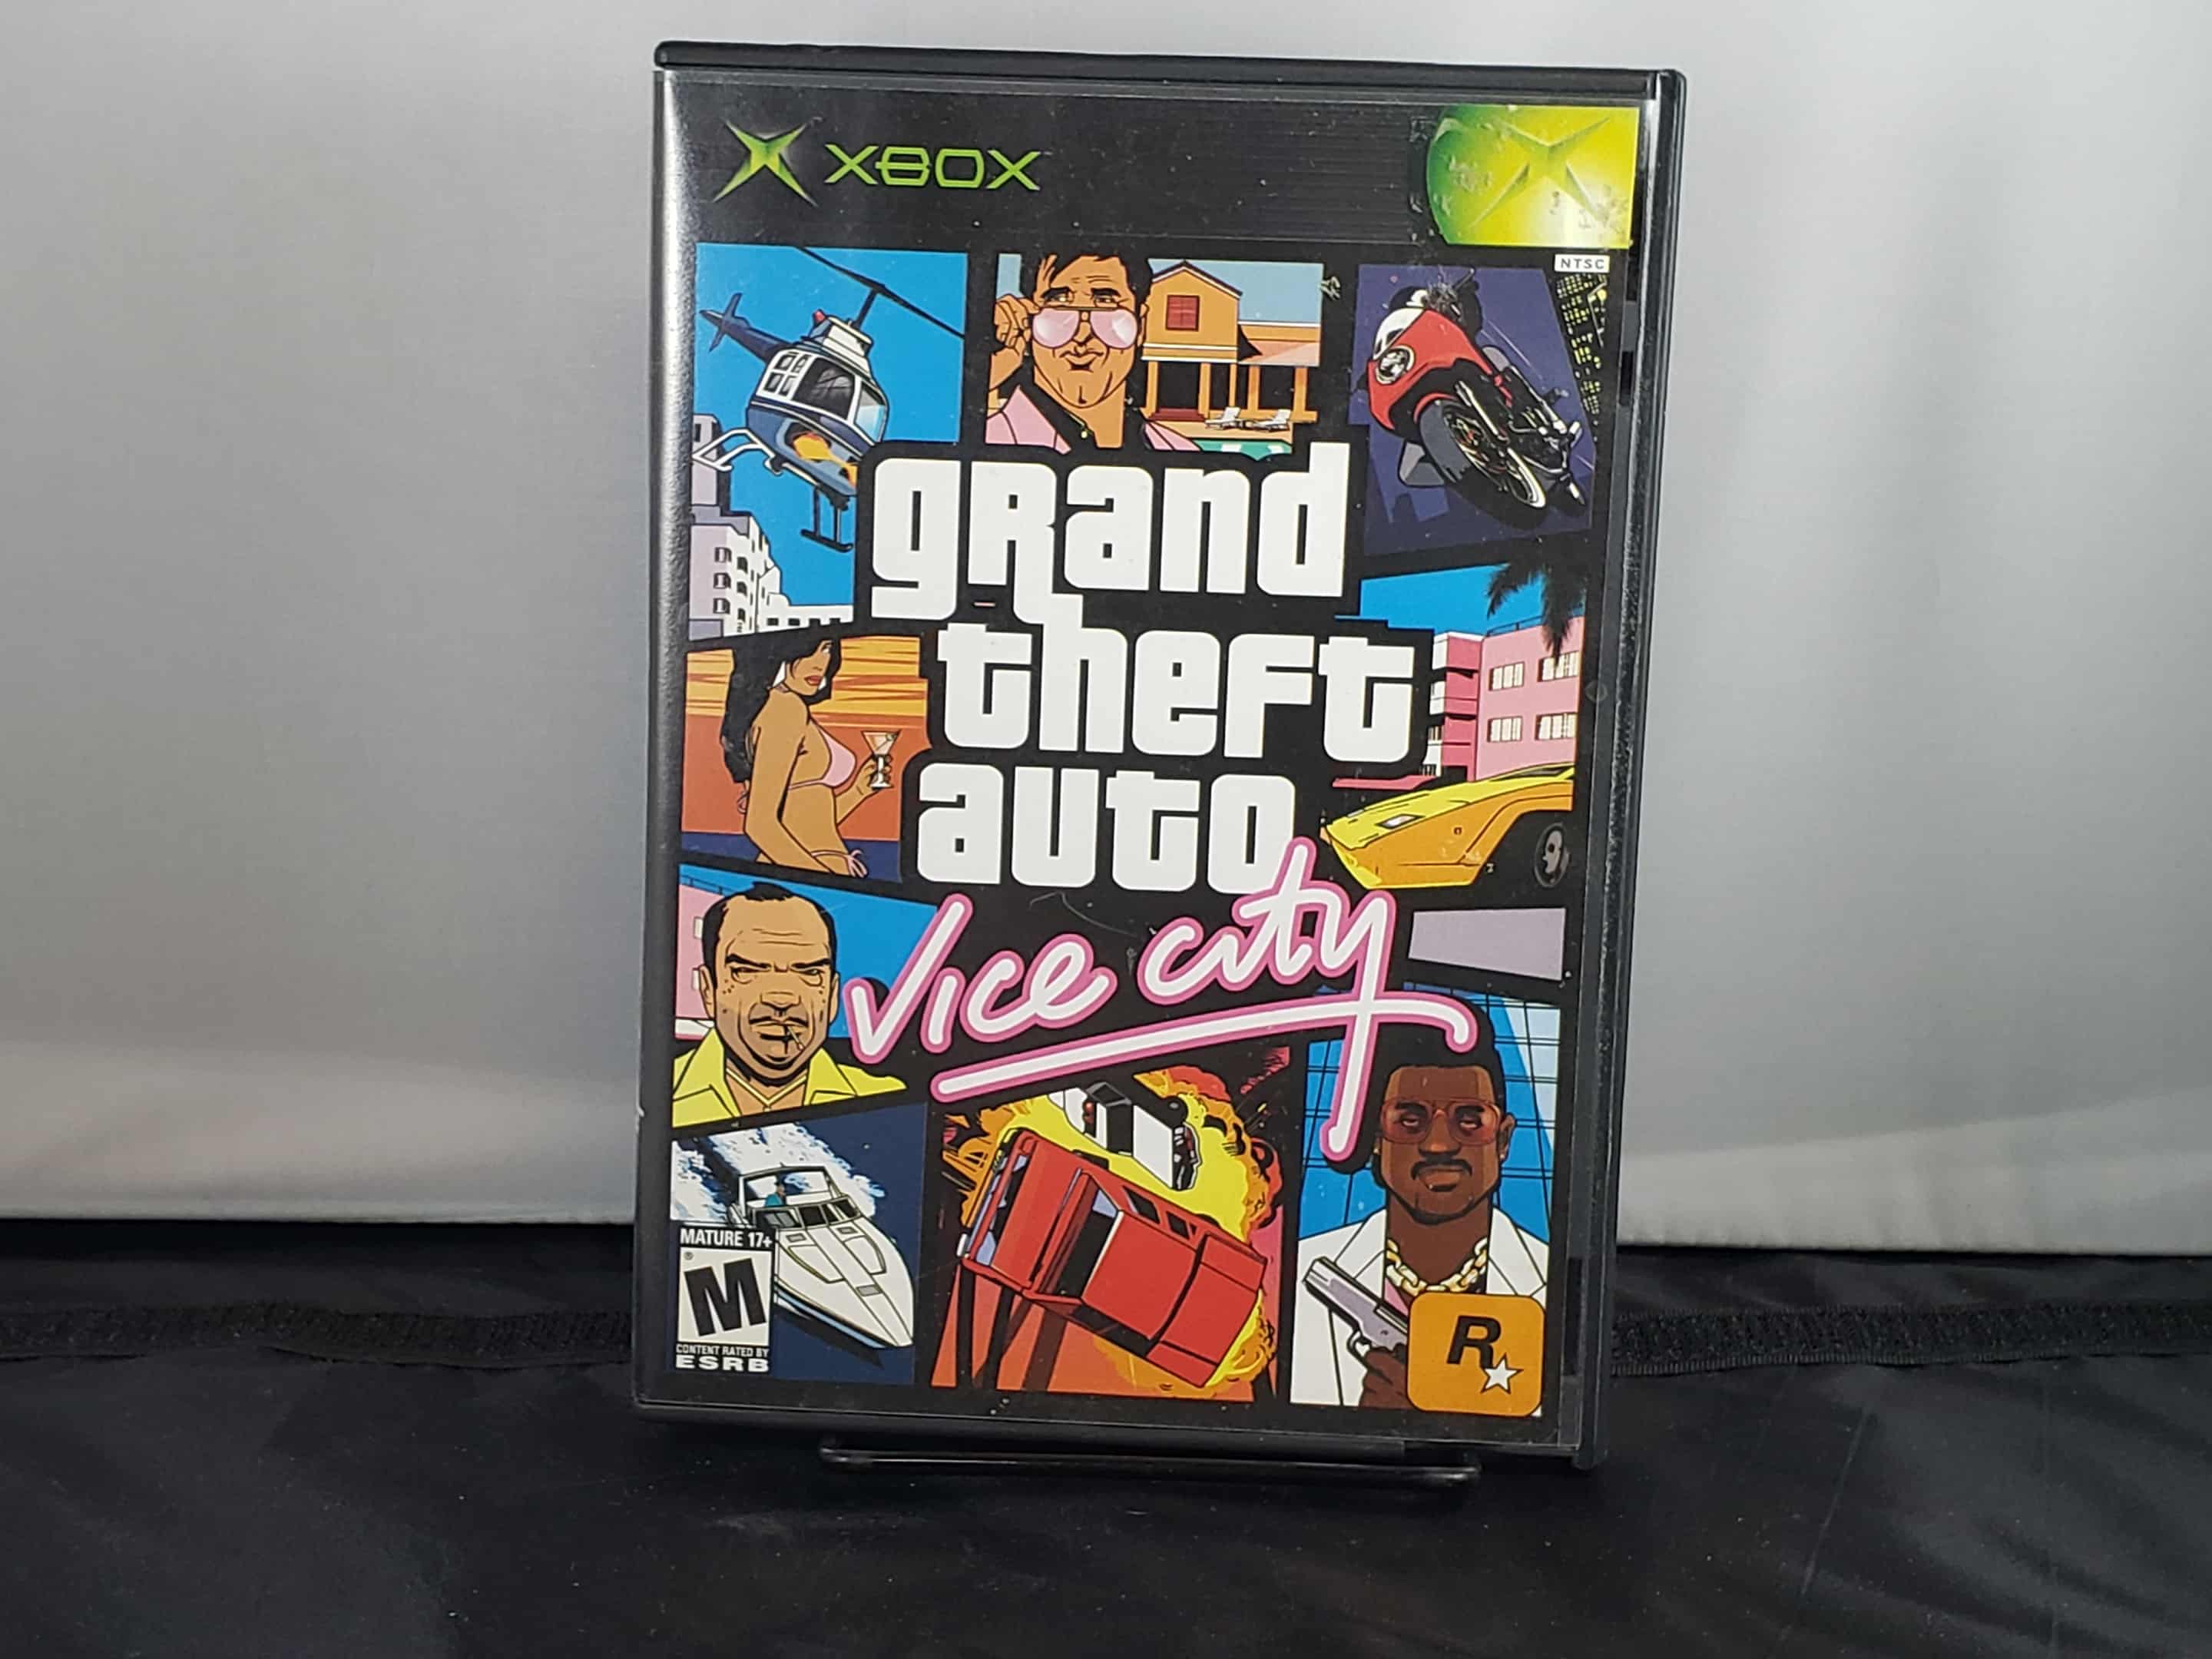 GTA Vice City Original - Xbox Clássico - Sebo dos Games - 10 anos!